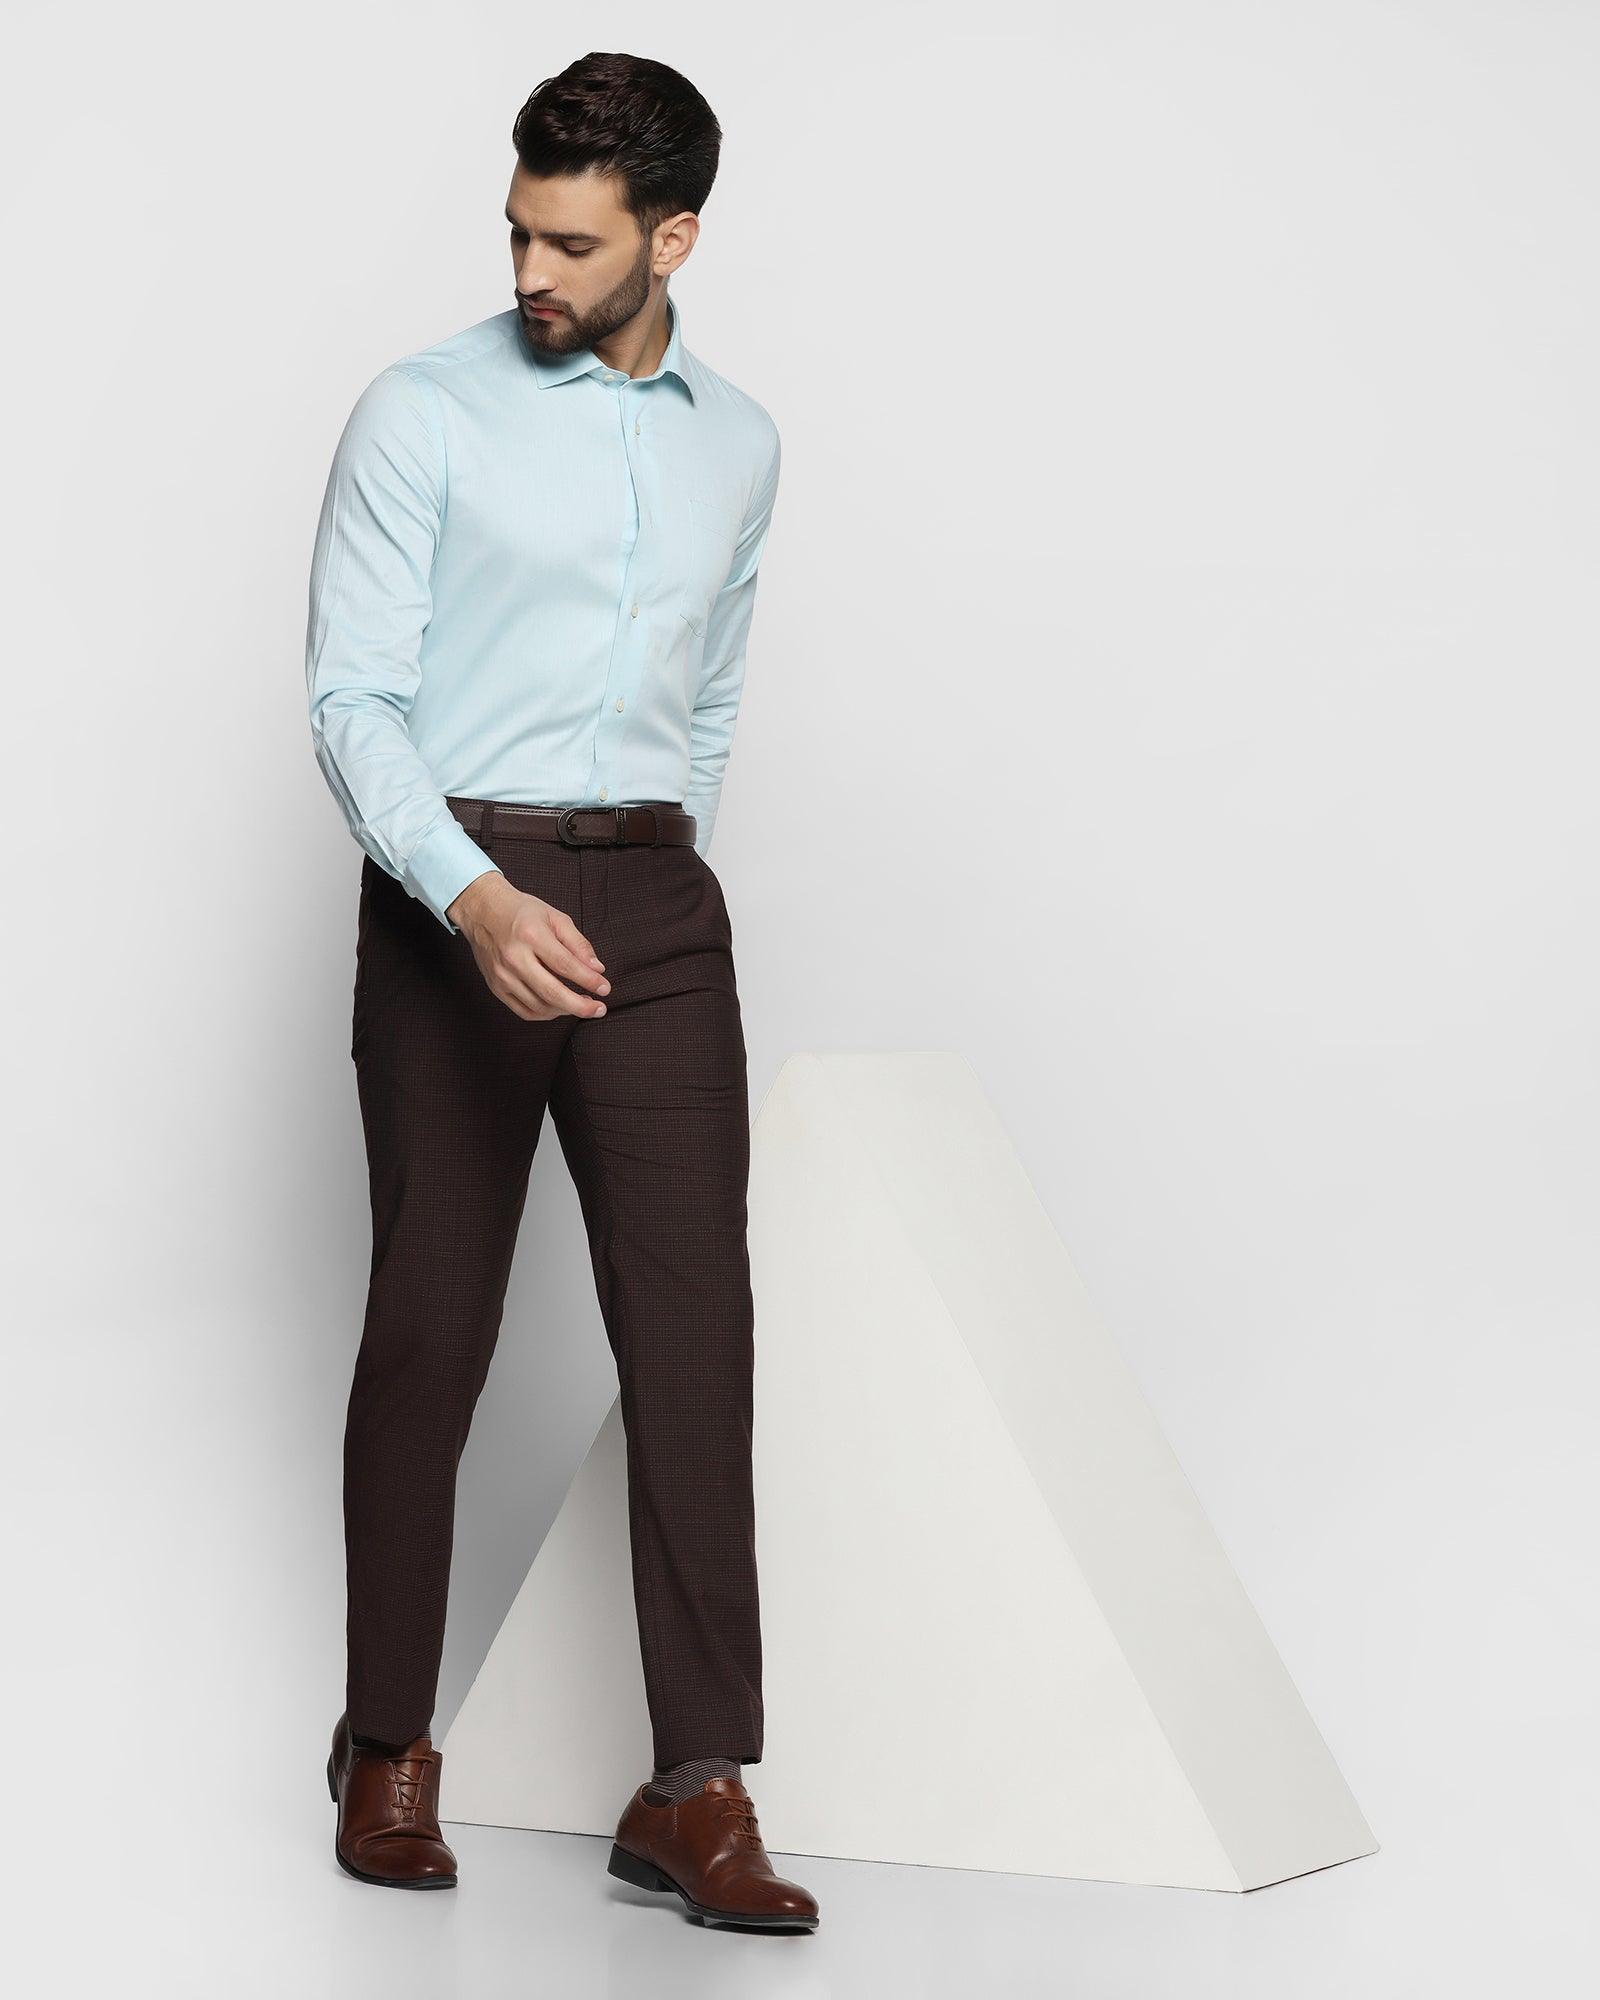 Men's pants online outlet clothing for men great deals